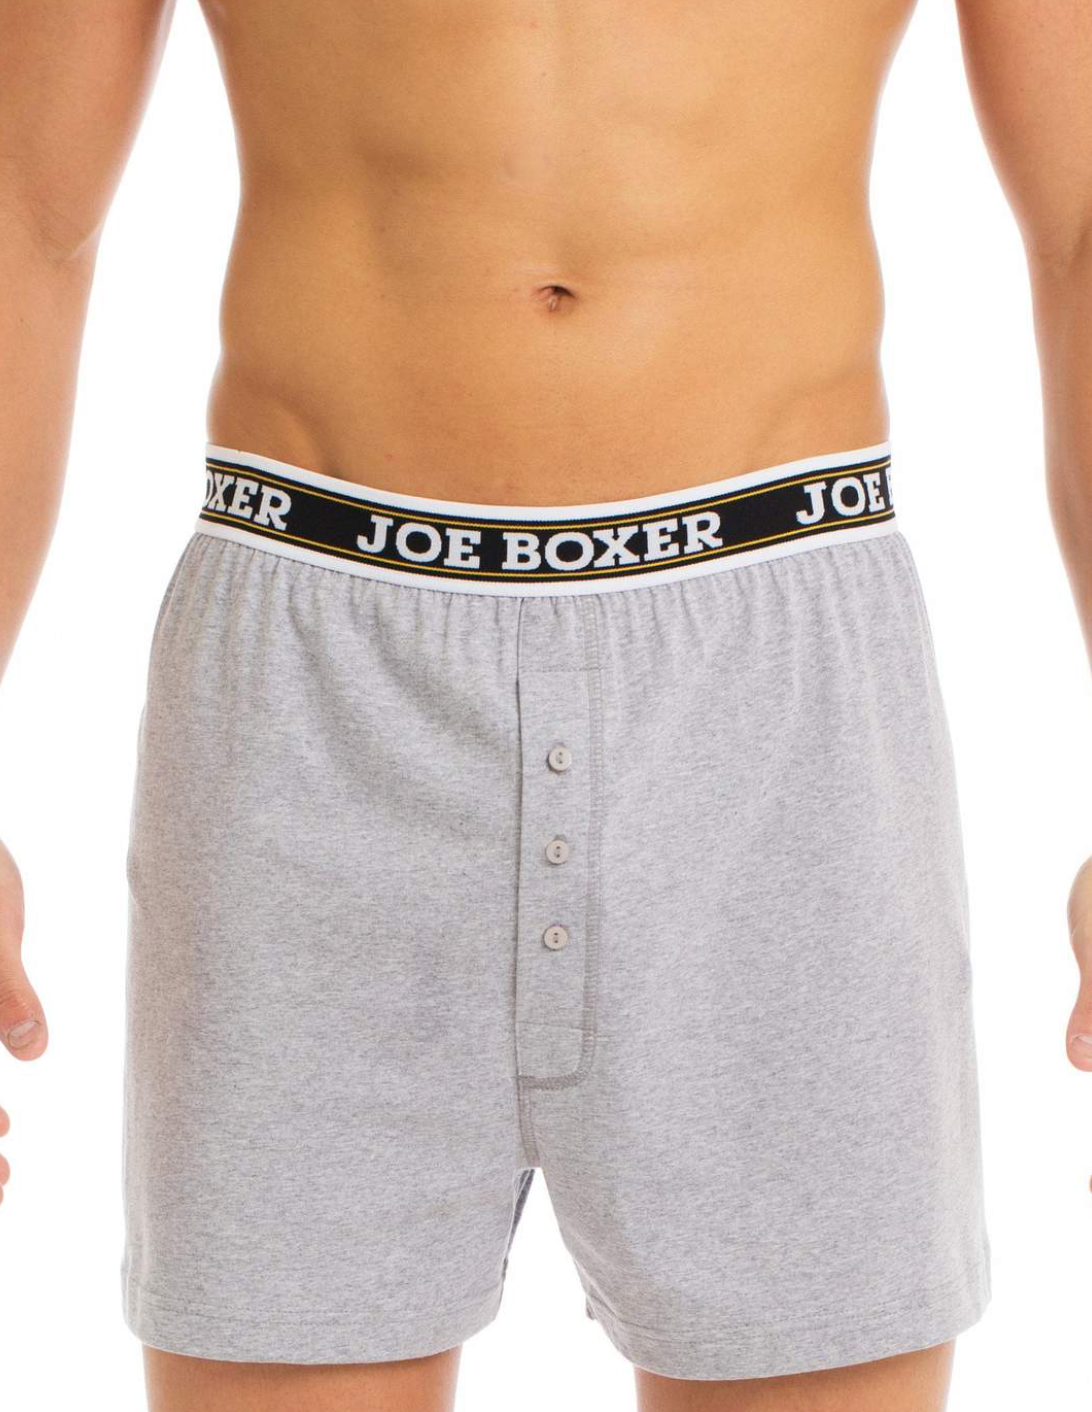 Boxers - Loose Zara Boxer